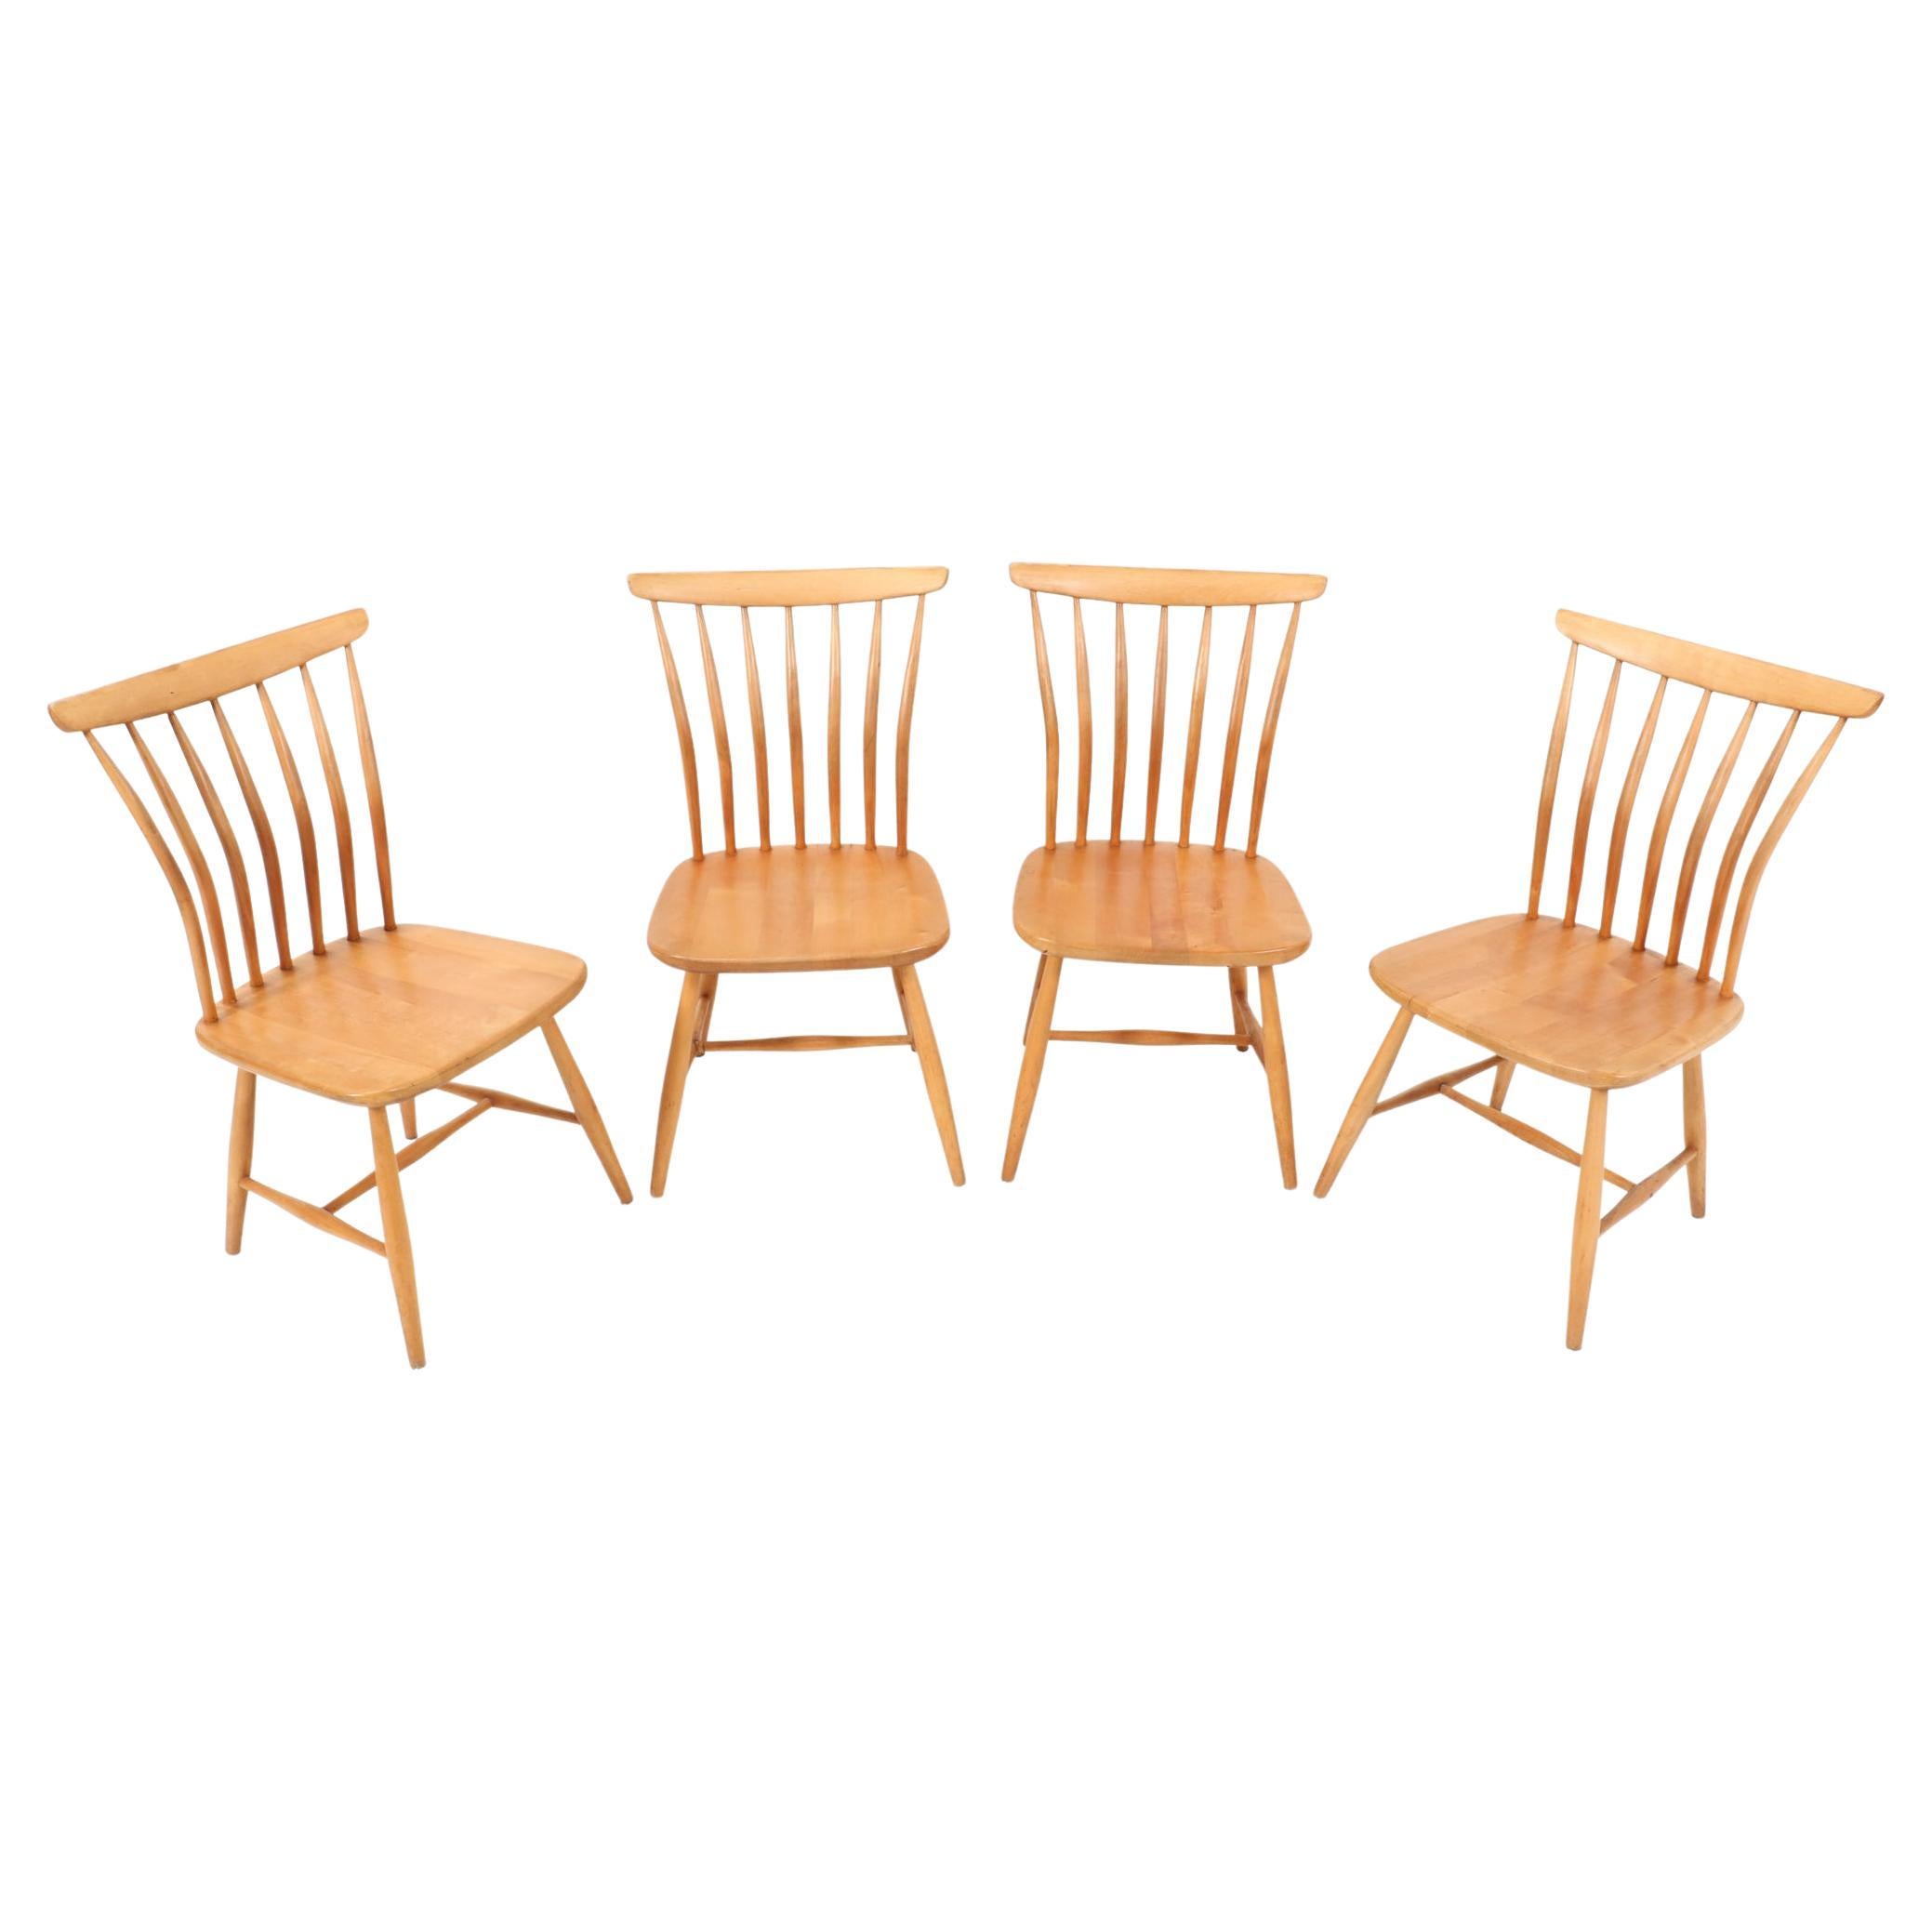 Four Mid-Century Modern Chairs by Bengt Akerblom & Gunnar Eklöf for Akerblom